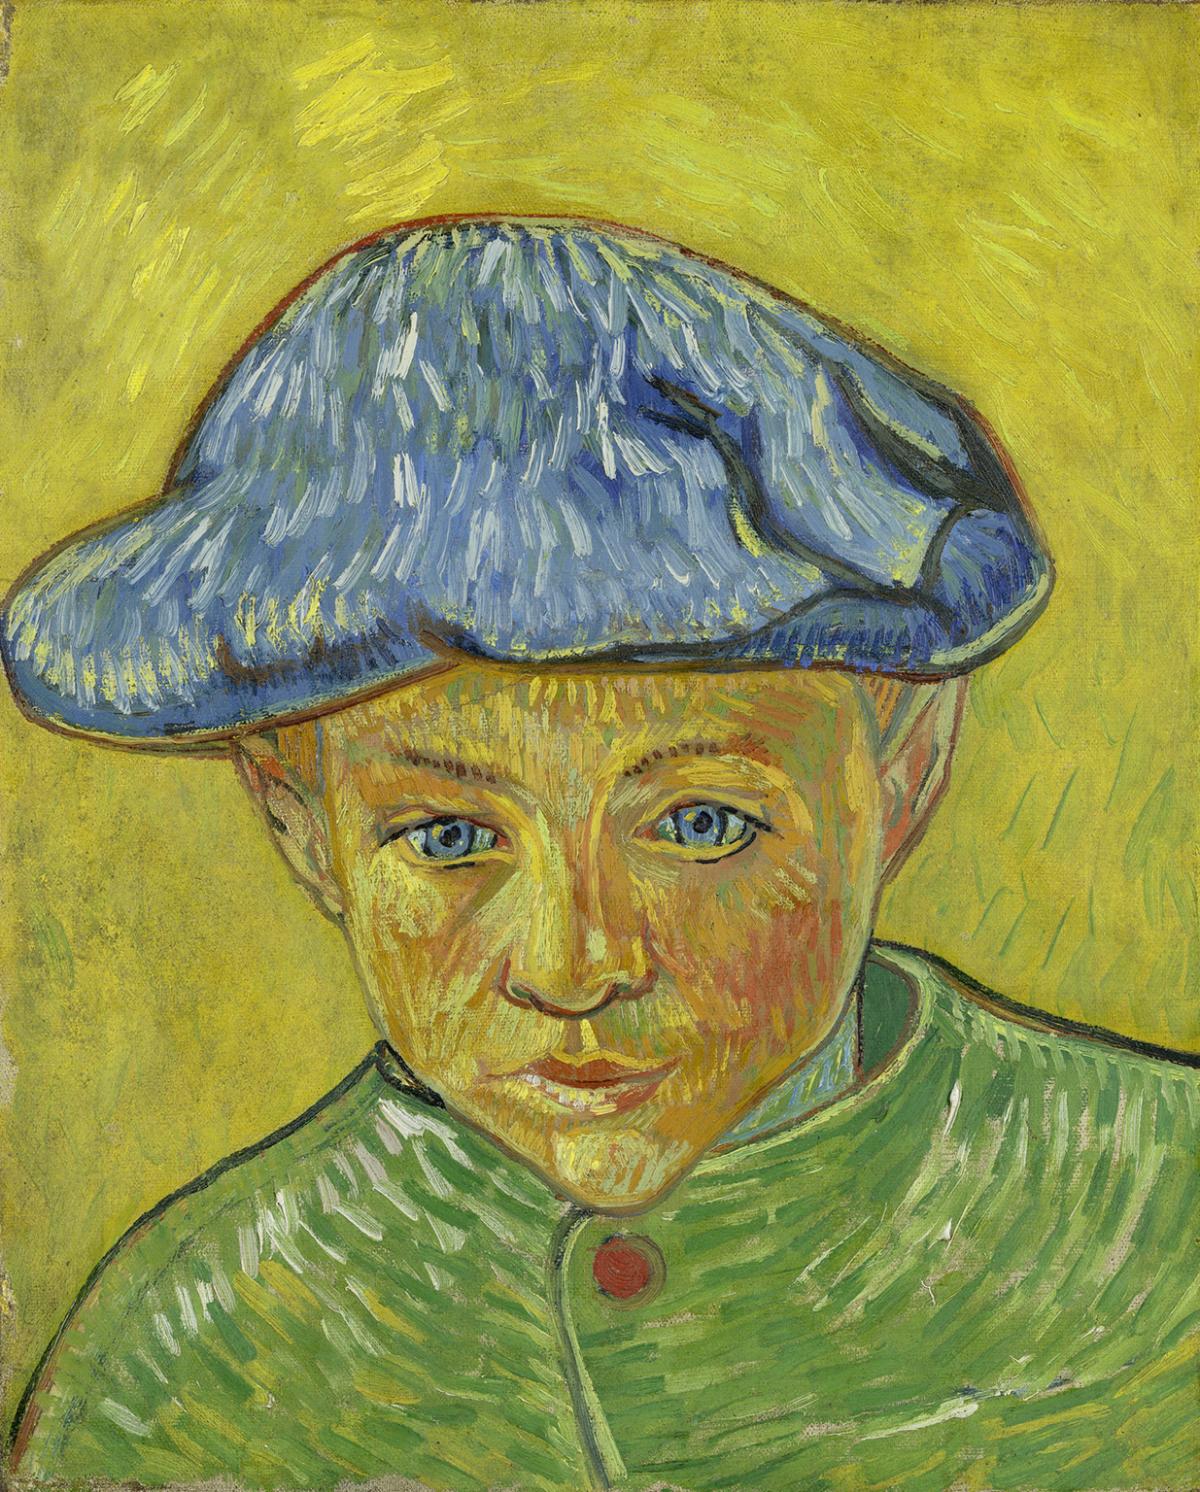 Portrait of young boy by Vincent van Gogh